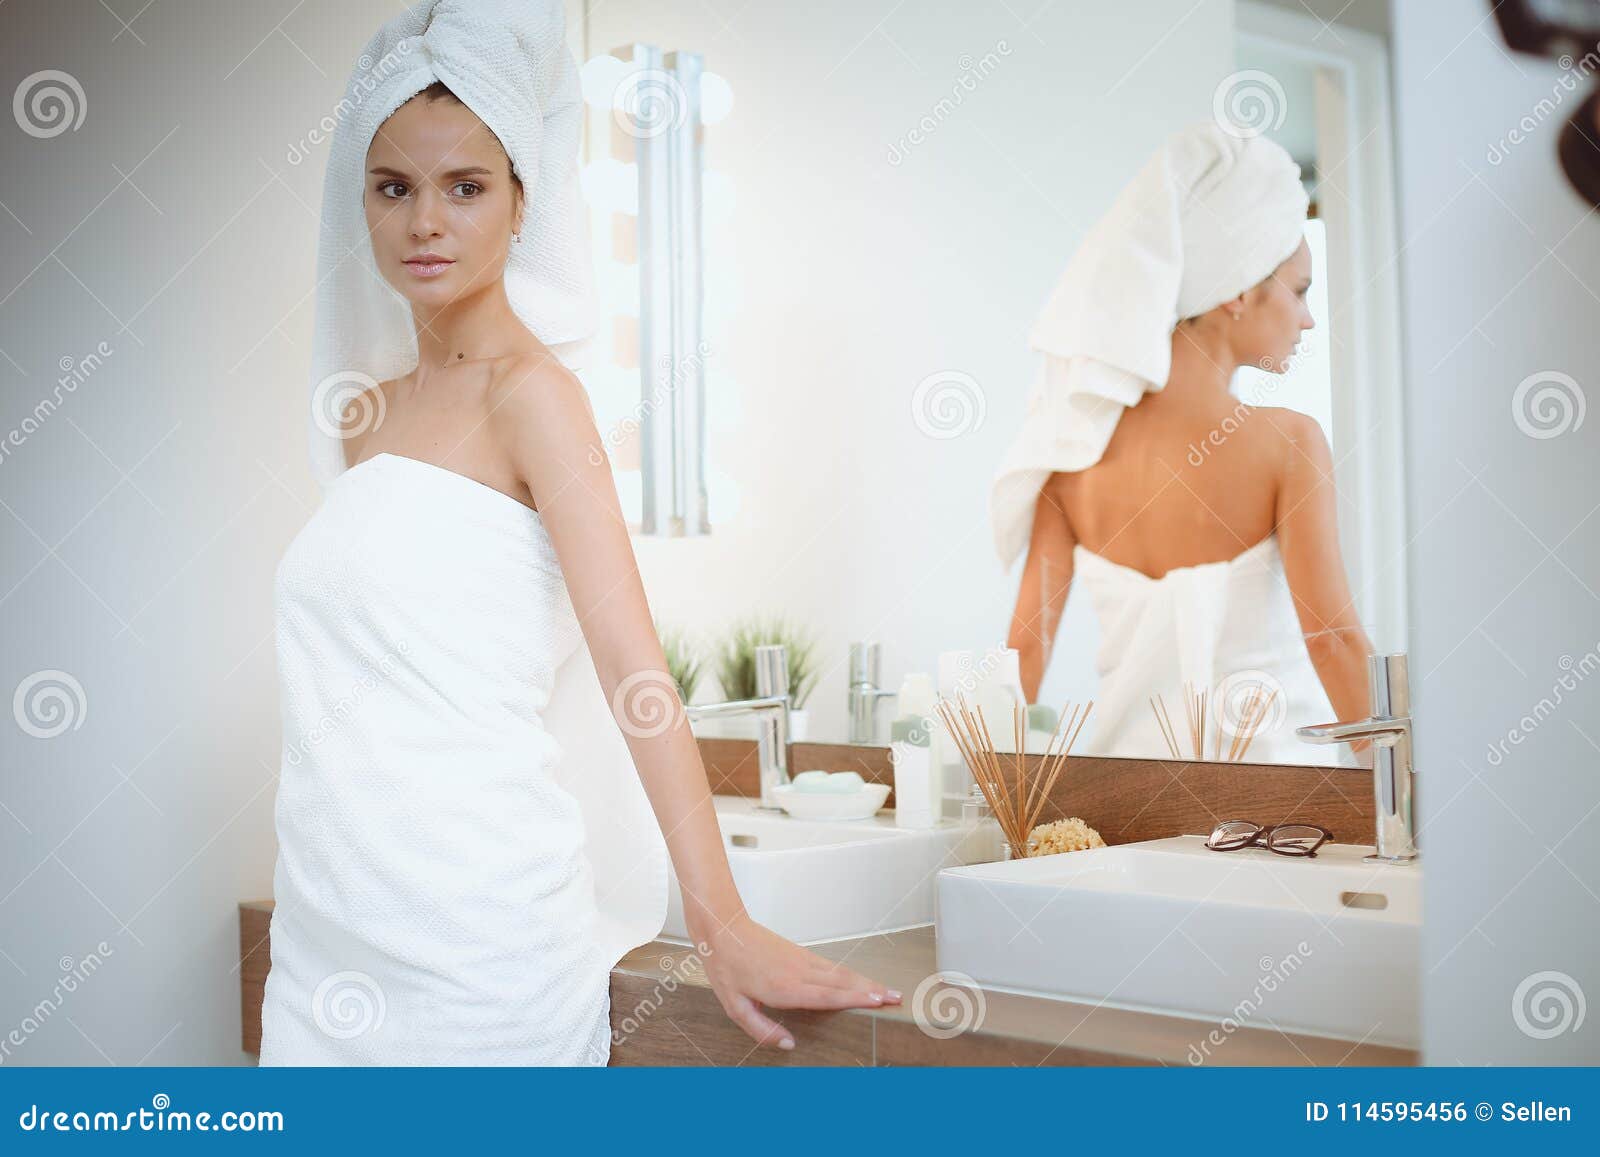 Упало полотенце перед. Девушка в полотенце перед зеркалом. Девушка в ванной у зеркала в полотенце. Фото в полотенце перед зеркалом.